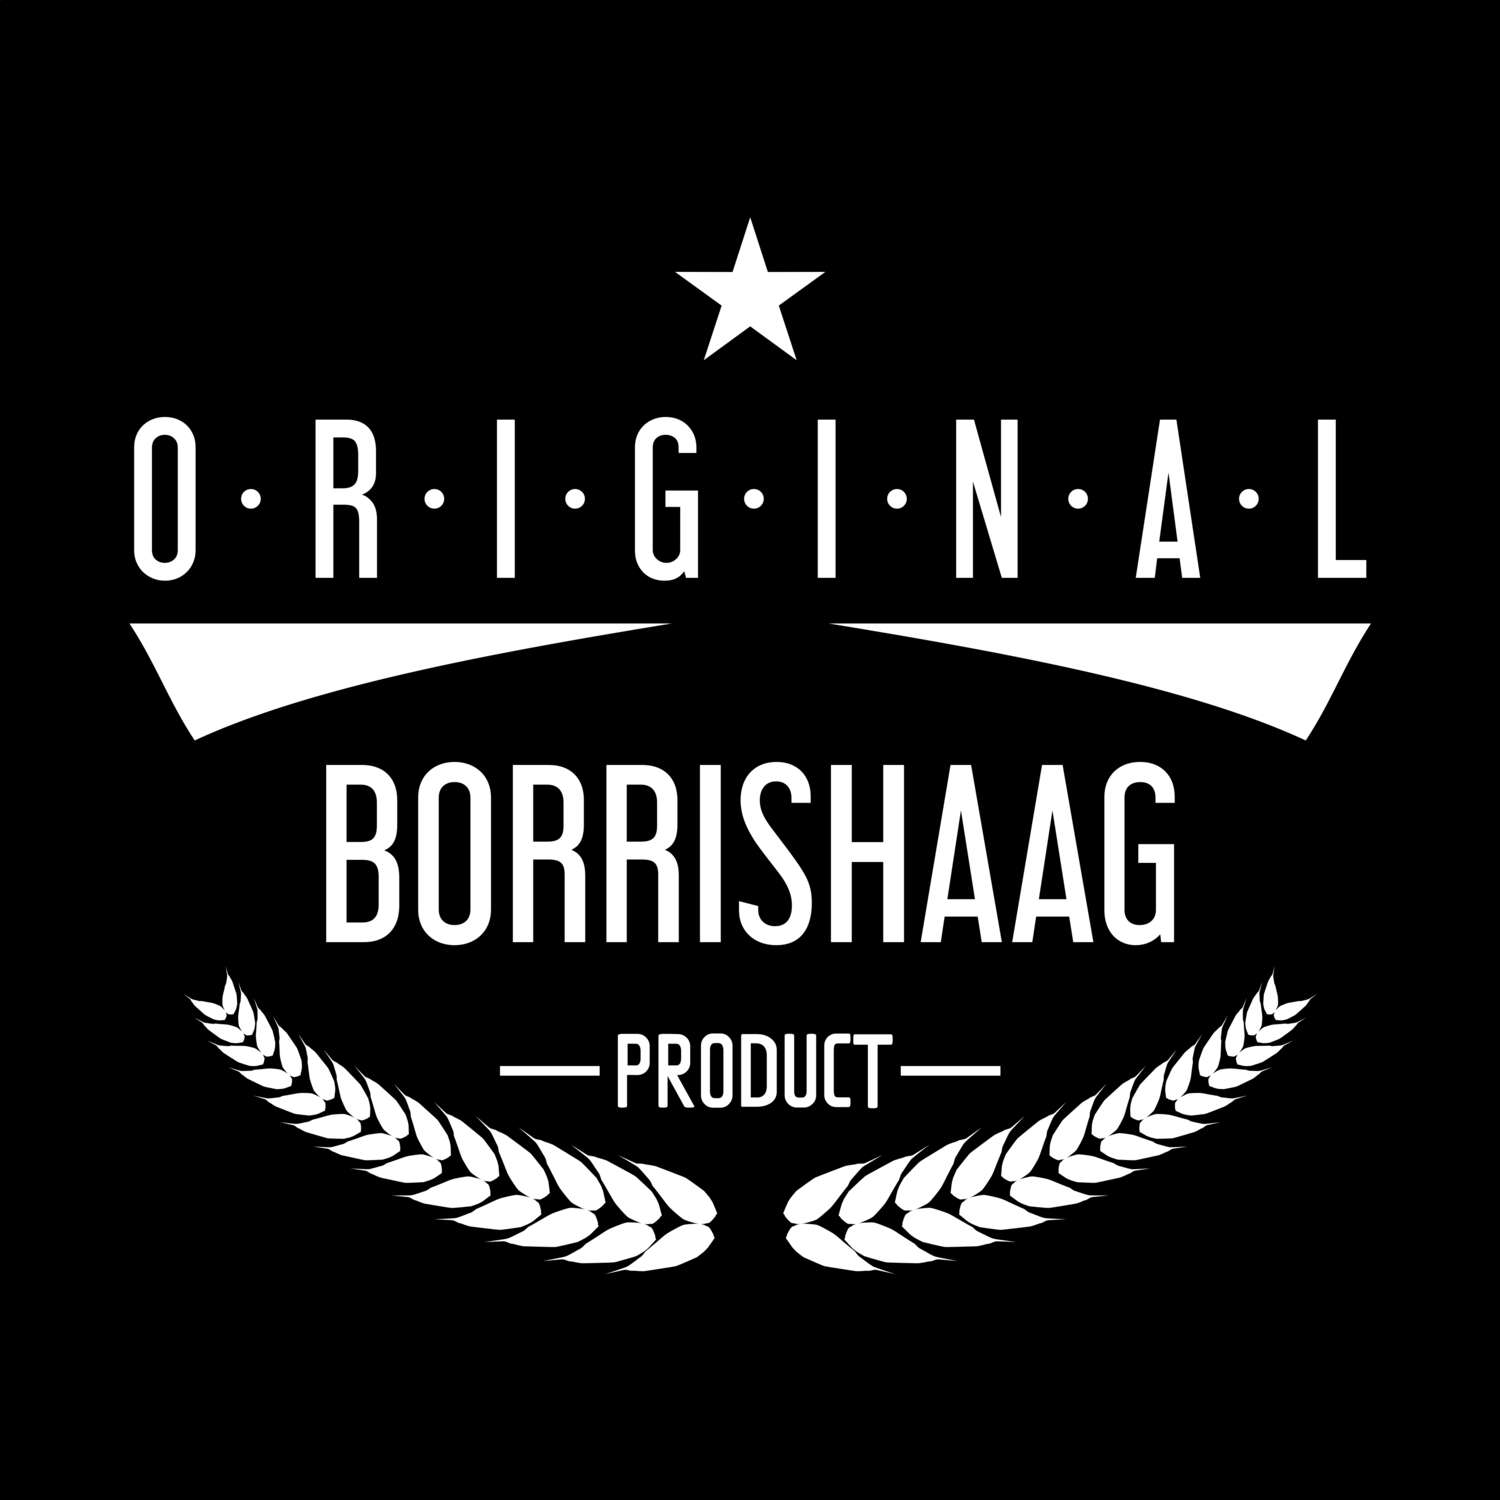 Borrishaag T-Shirt »Original Product«